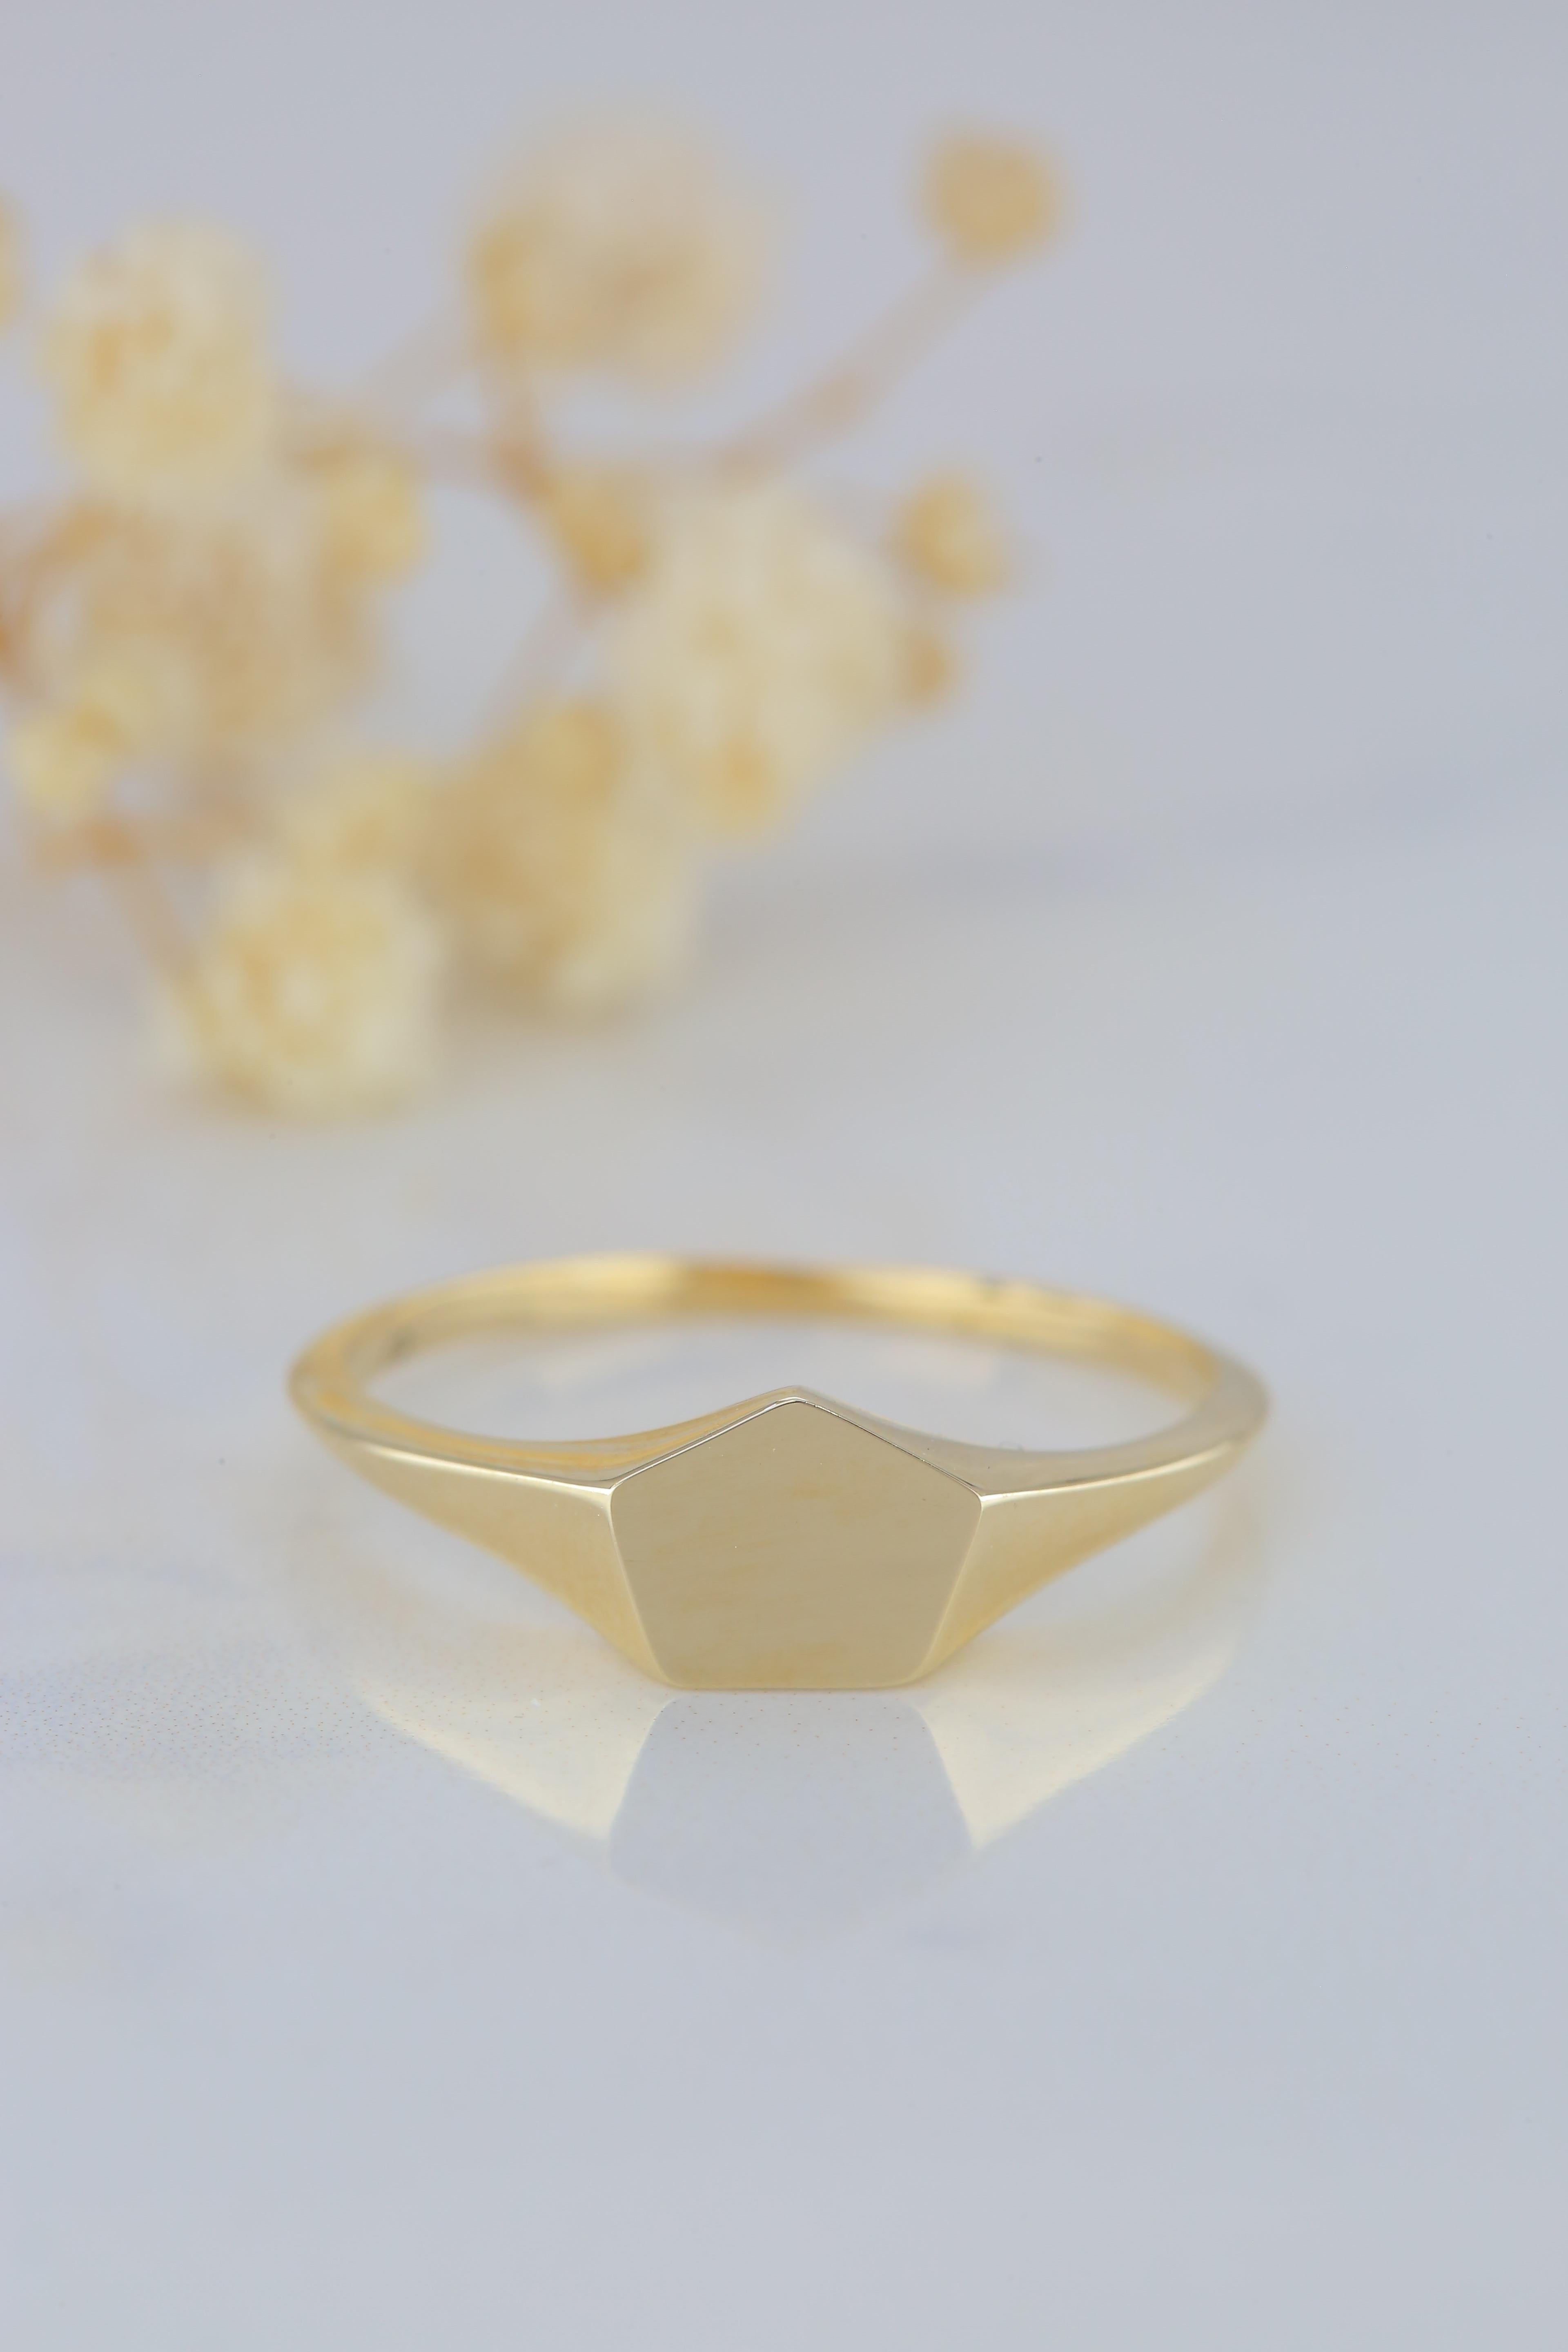 Im Angebot: Rosay Siegelring, 14K Gold Rosay Pentagon Siegelring, kleiner Pentagonal Ring () 5